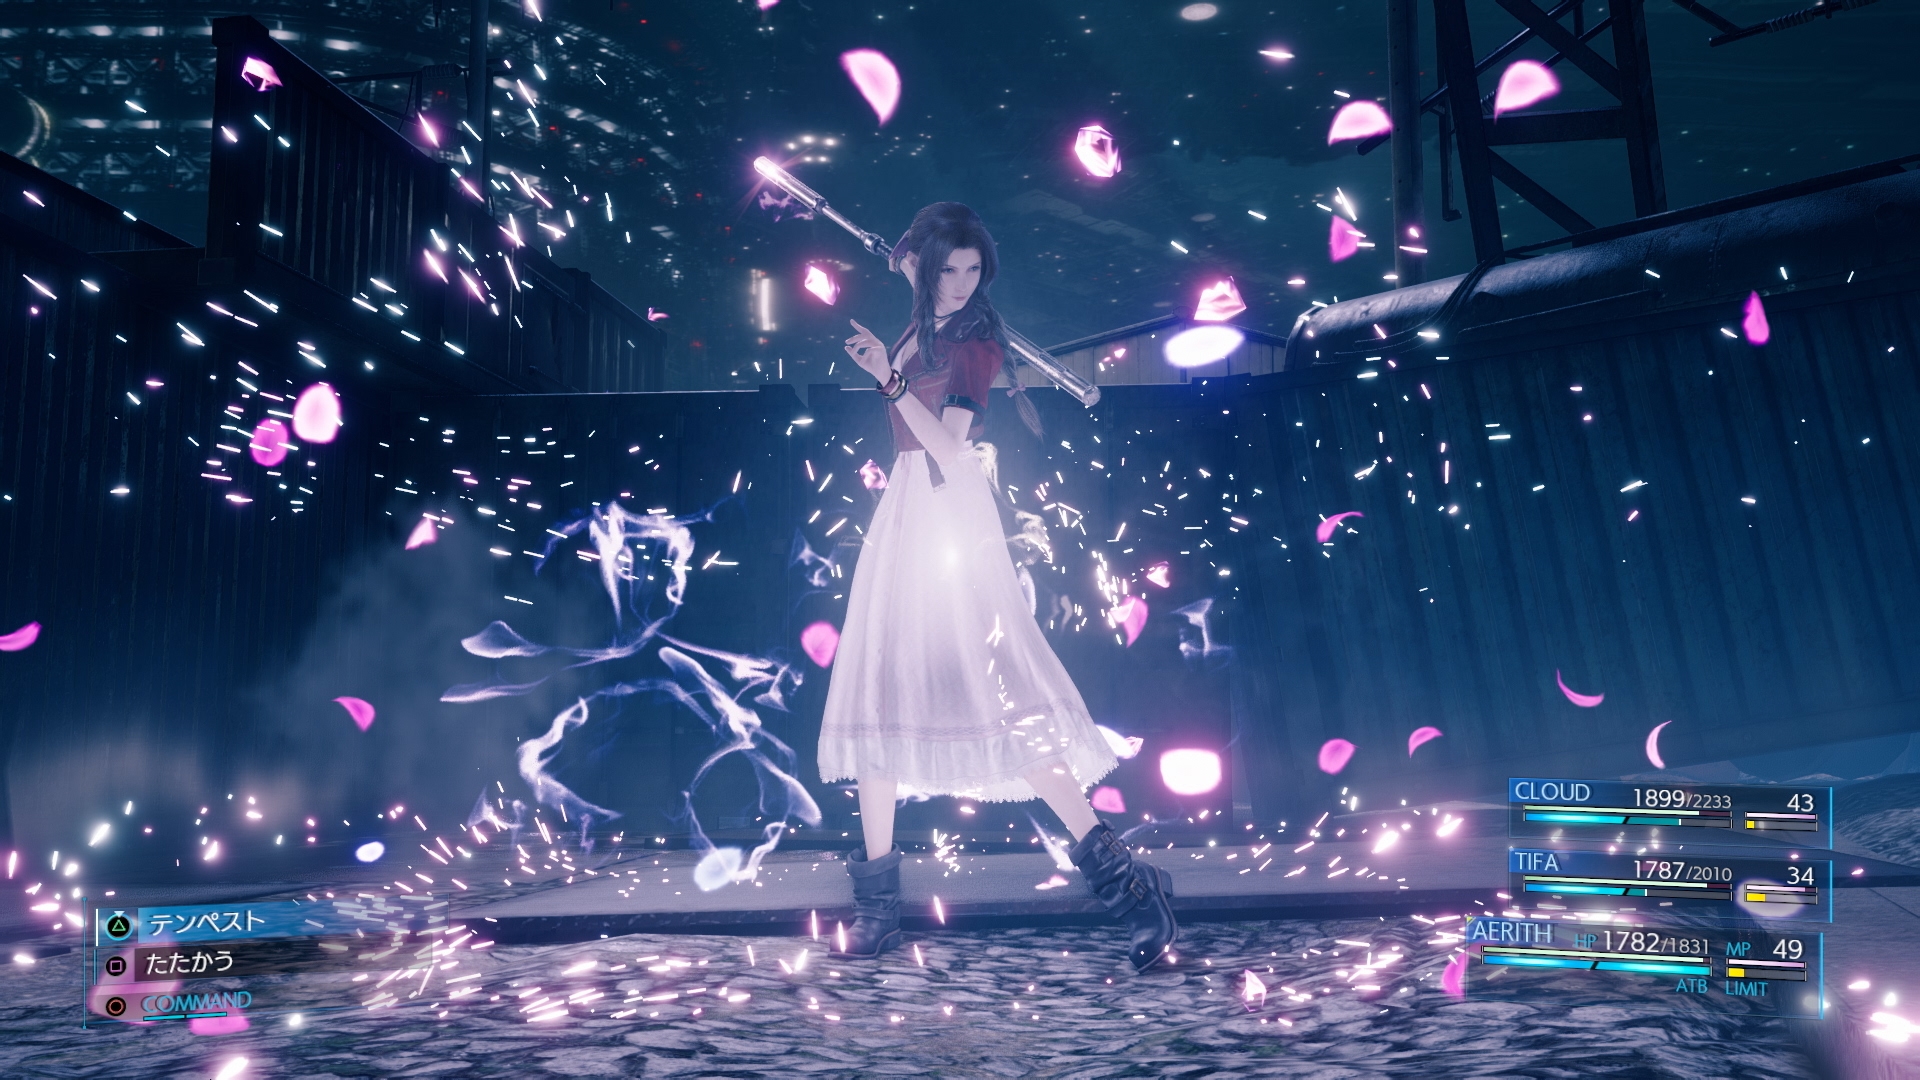 All Games Delta Final Fantasy Vii Remake New Key Visuals And Screenshots